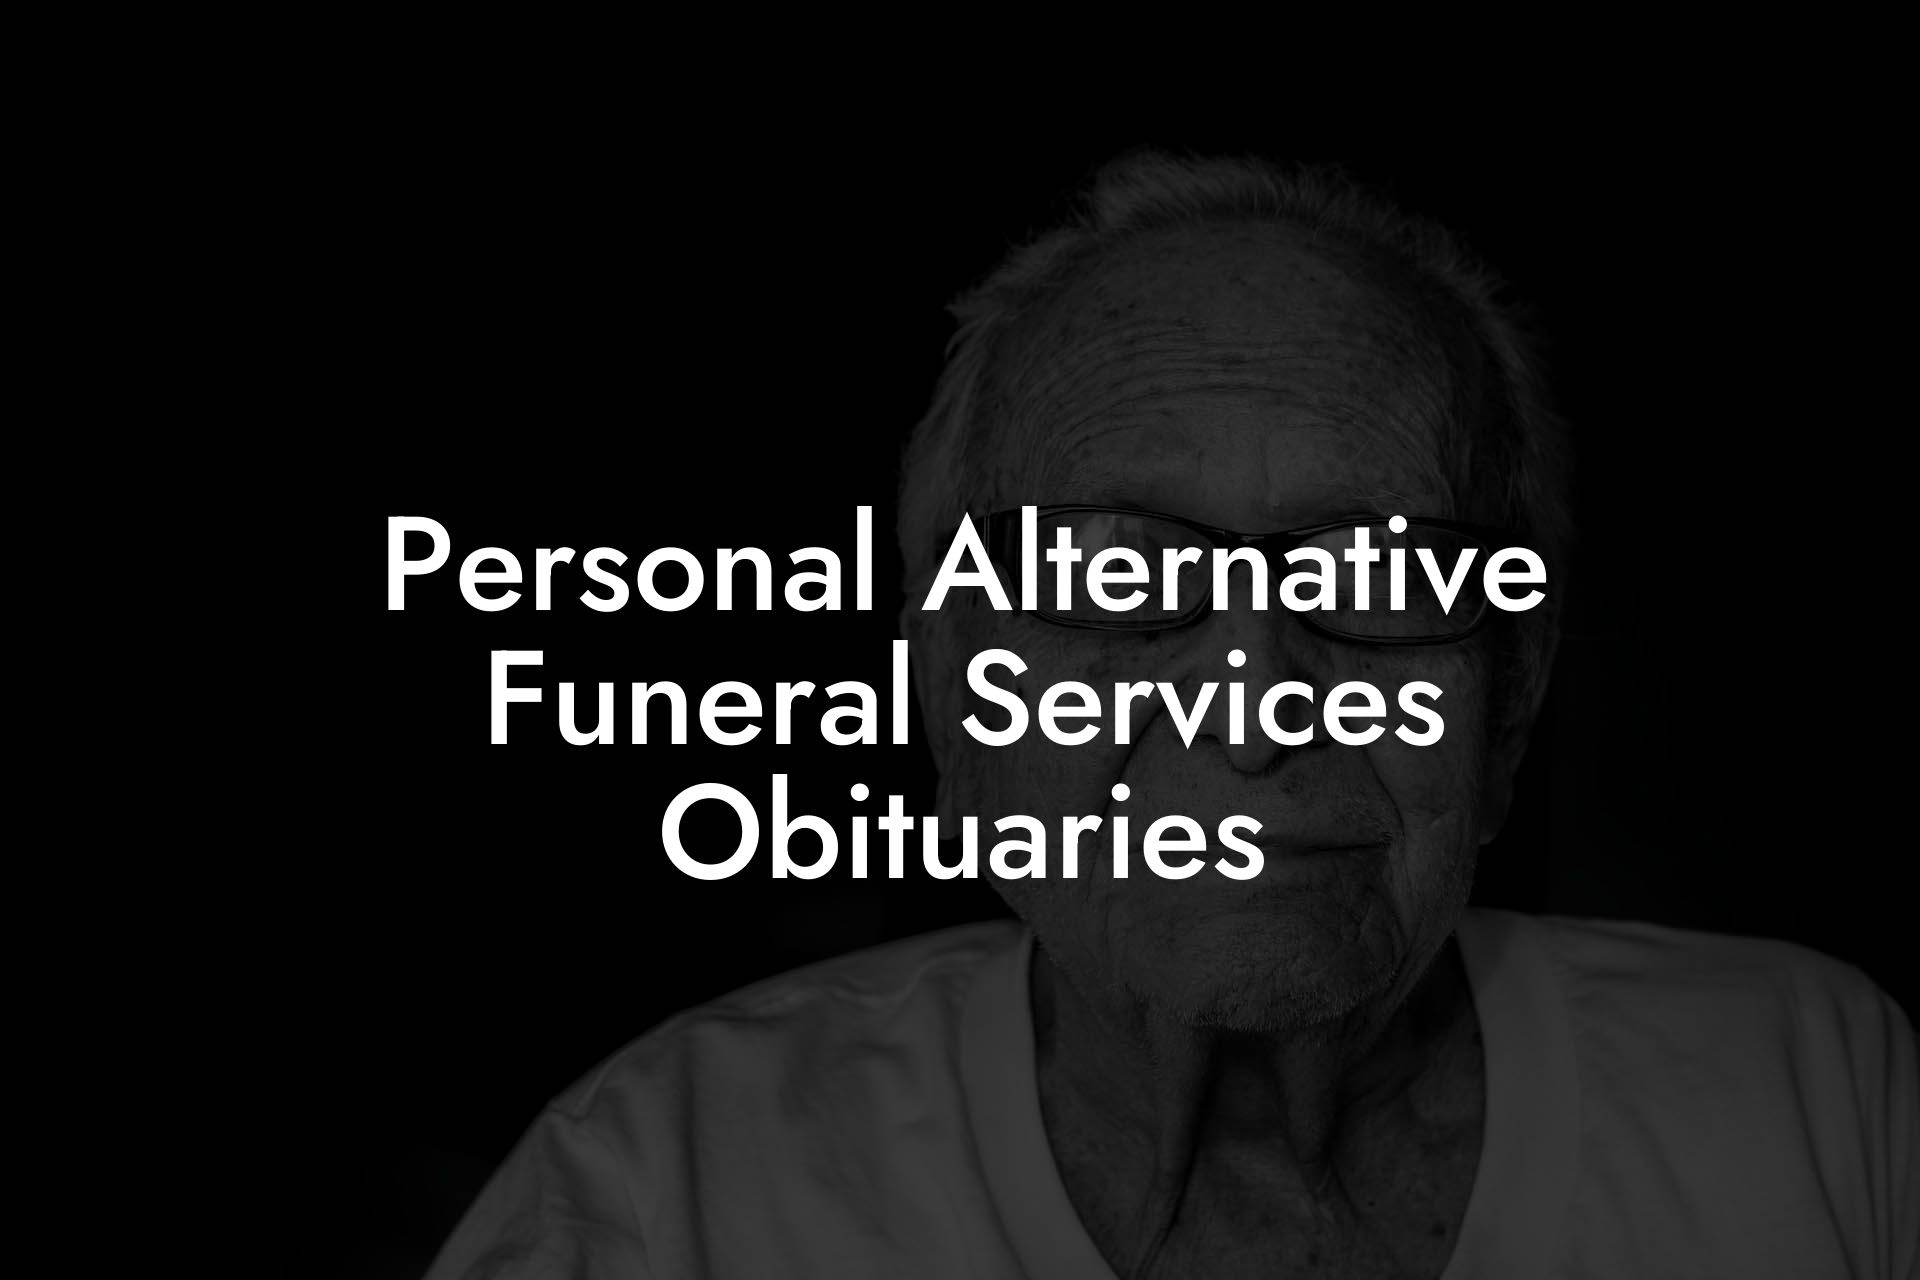 Personal Alternative Funeral Services Obituaries